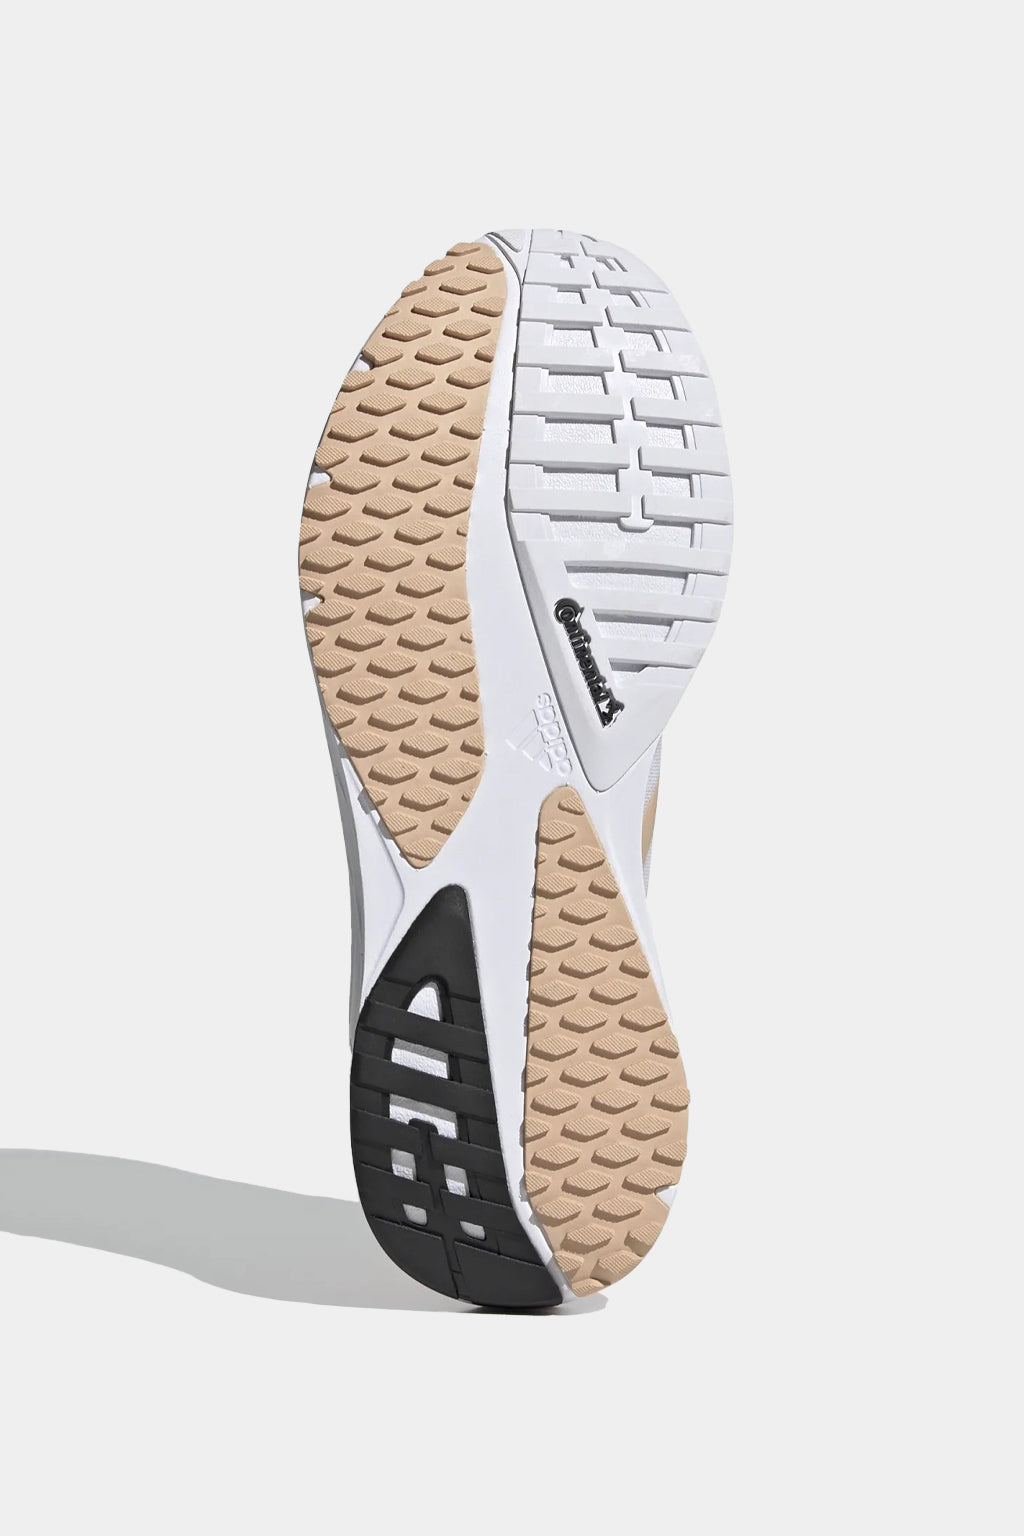 Adidas - SL 20.2 Shoes